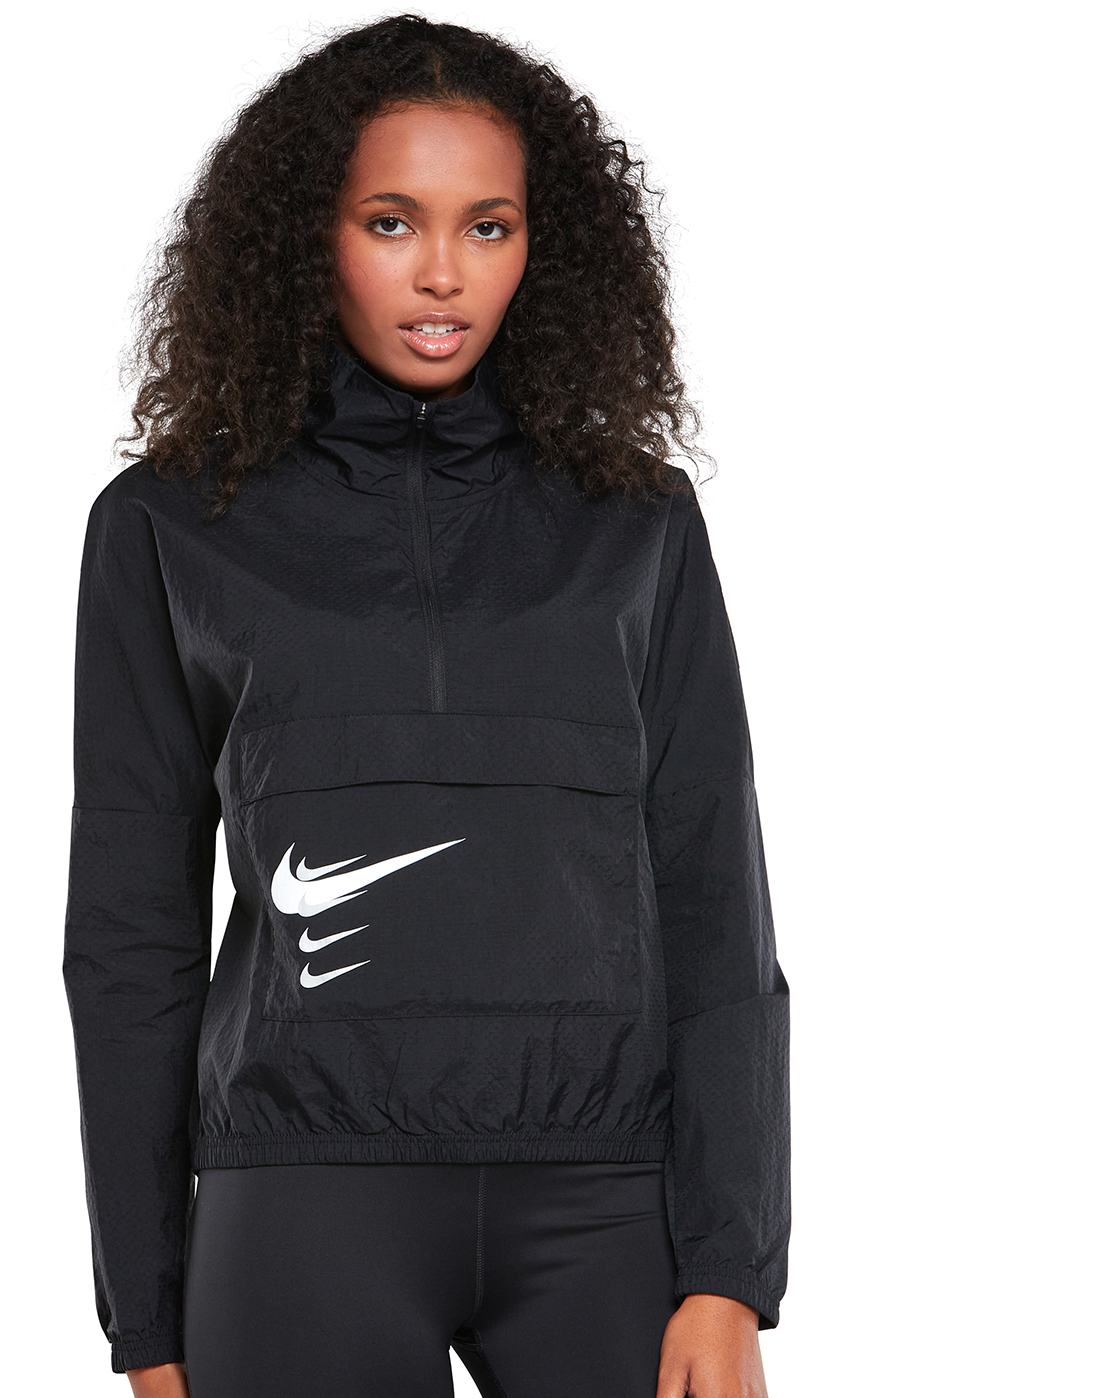 Nike Womens Swoosh Run Jacket - Black 